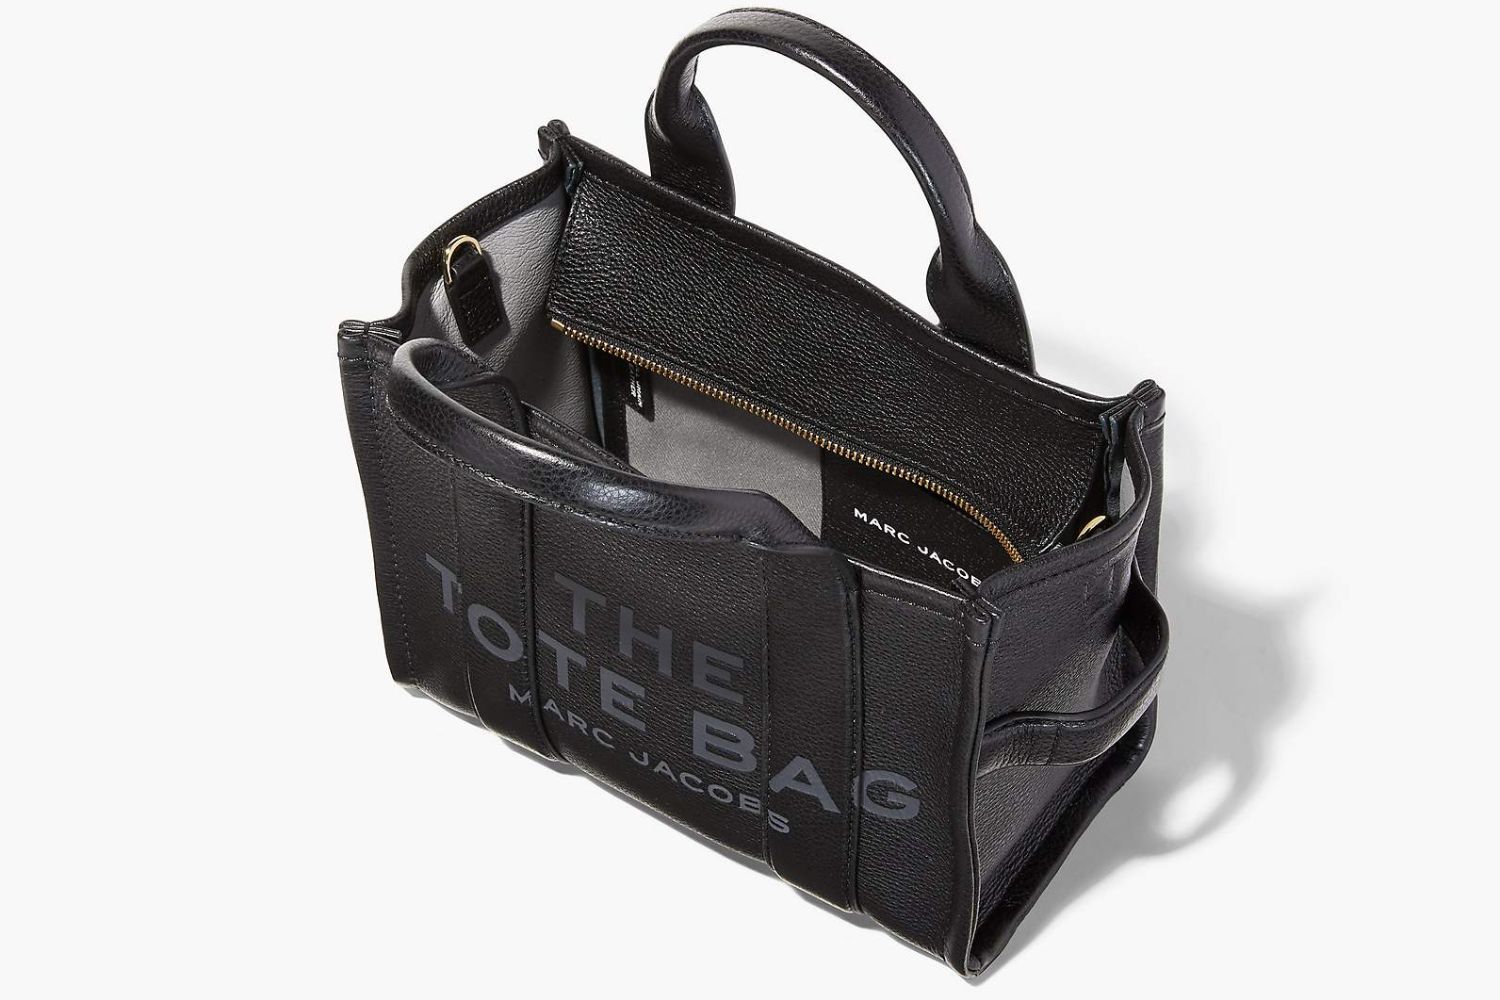 Marc Jacobs Tote Bag Mini - Facts.net